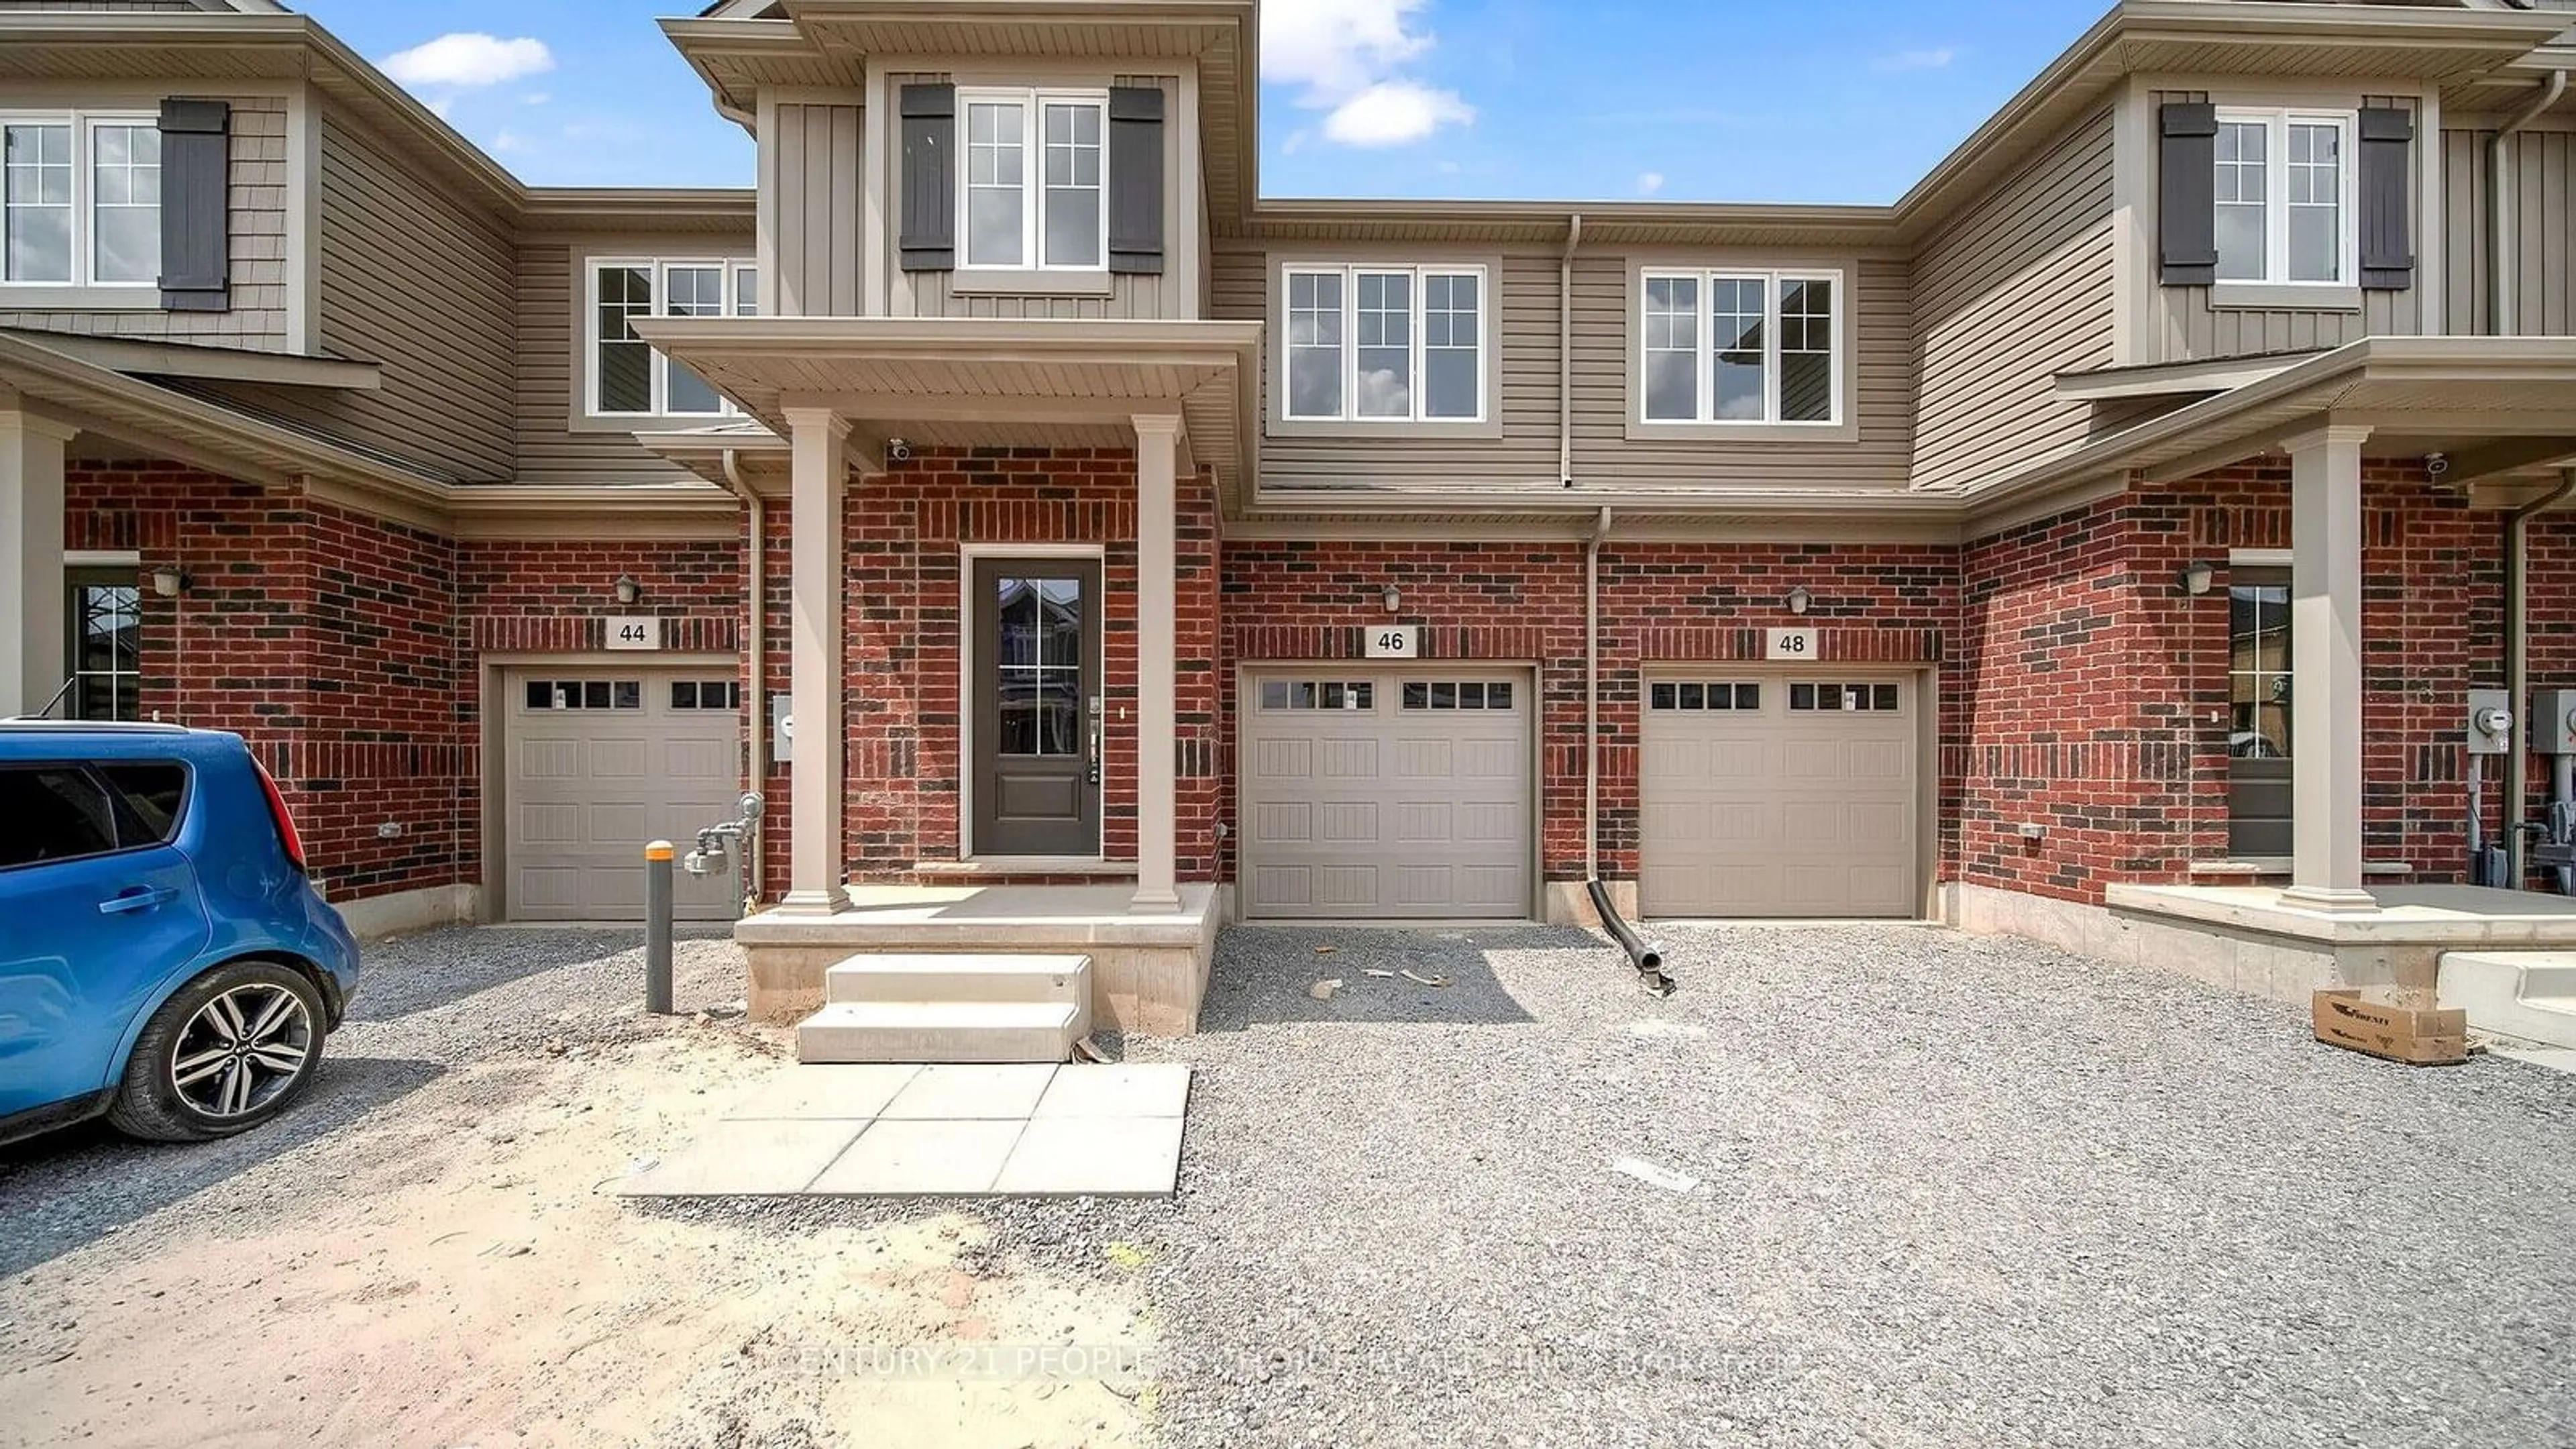 Home with brick exterior material for 46 Samuel Ave, Pelham Ontario L3B 5N5